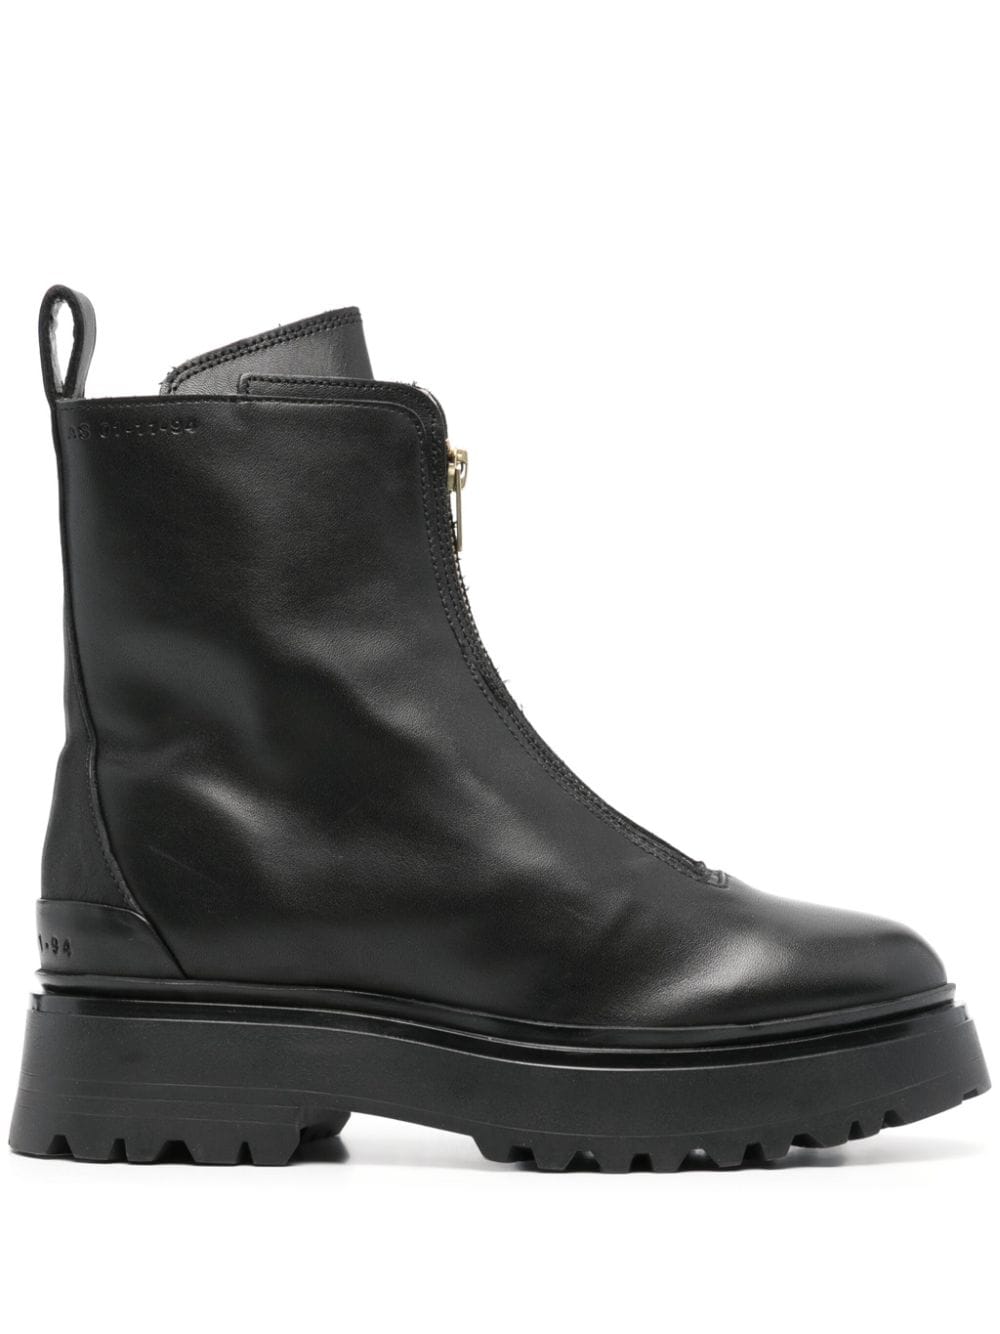 AllSaints Ophelia leather zipped boots - Nero